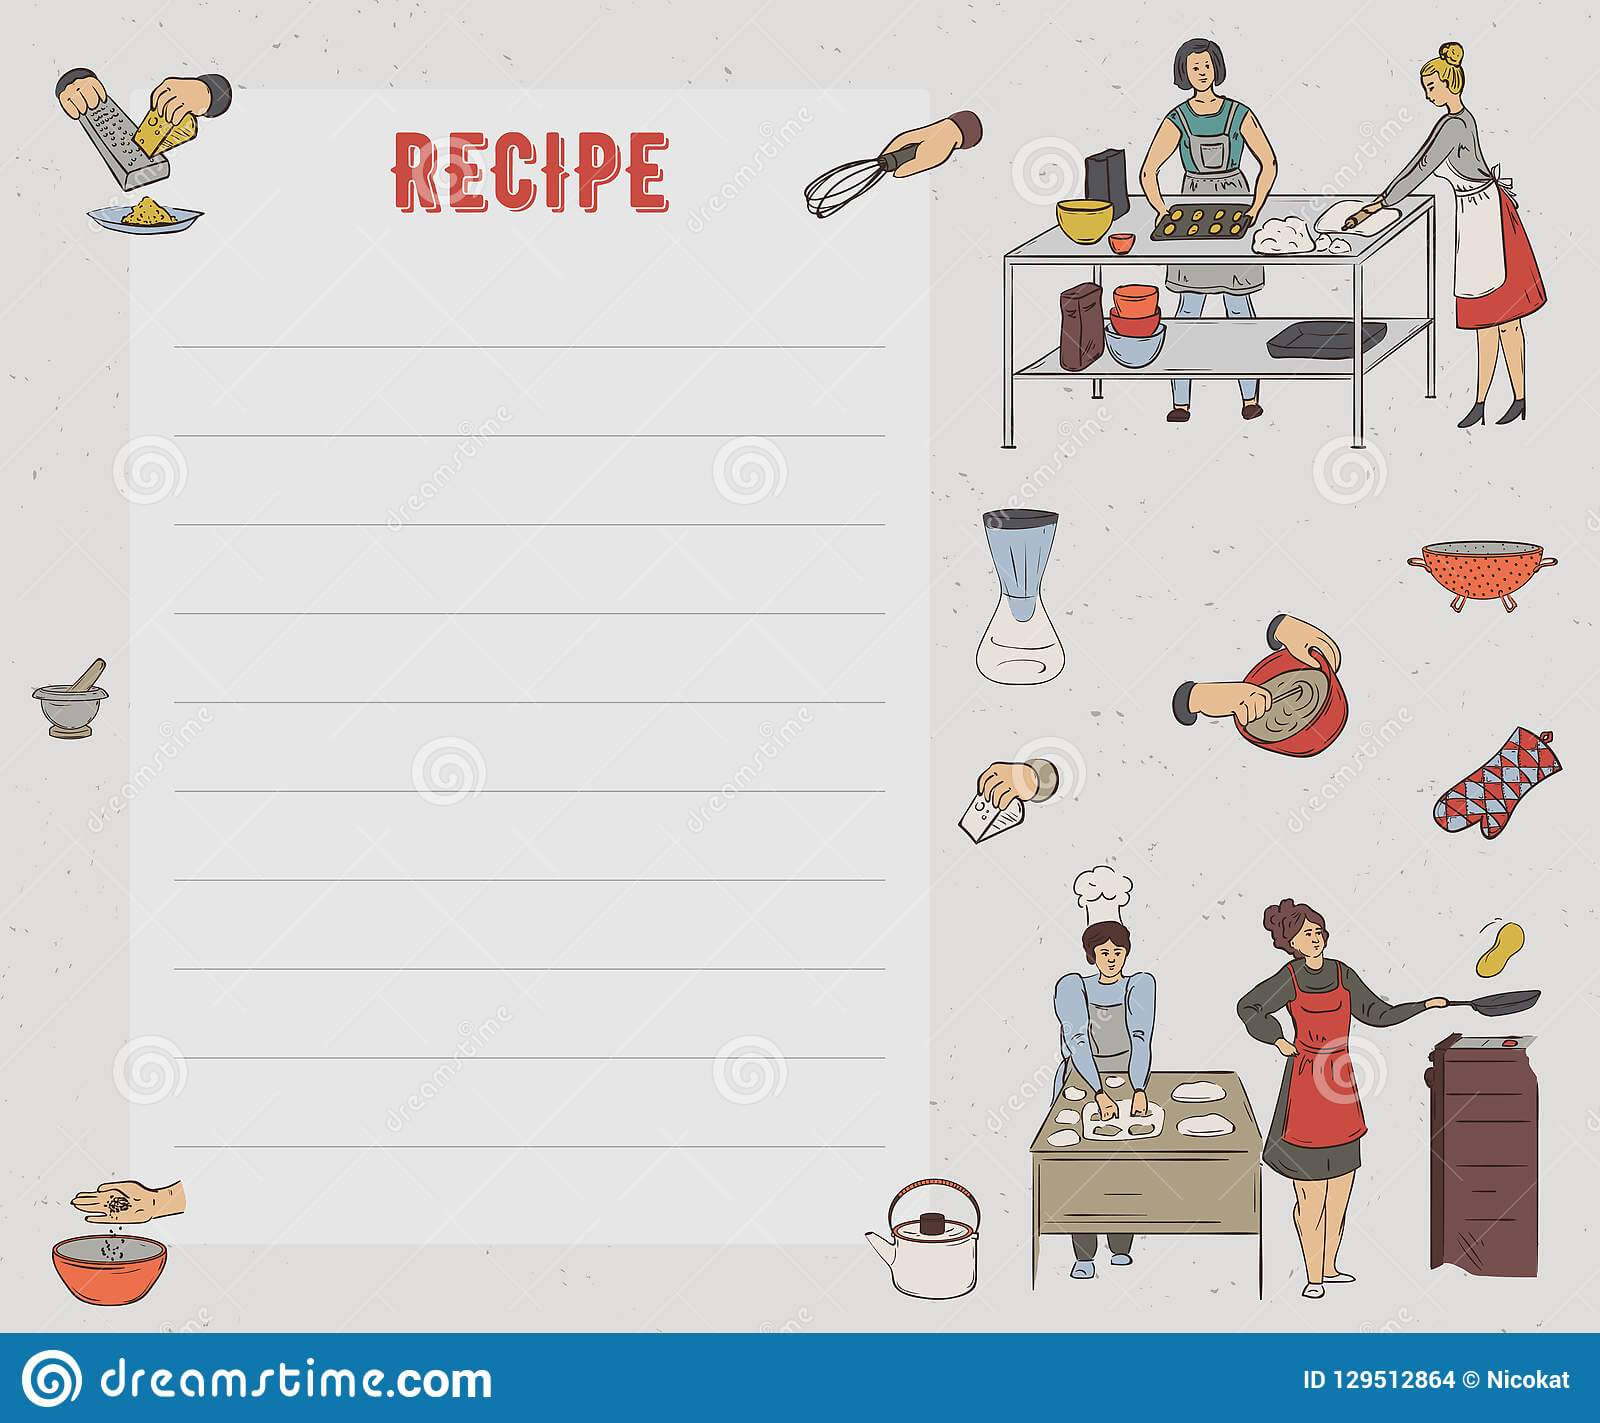 Recipe Card. Cookbook Page. Design Template With People Throughout Recipe Card Design Template